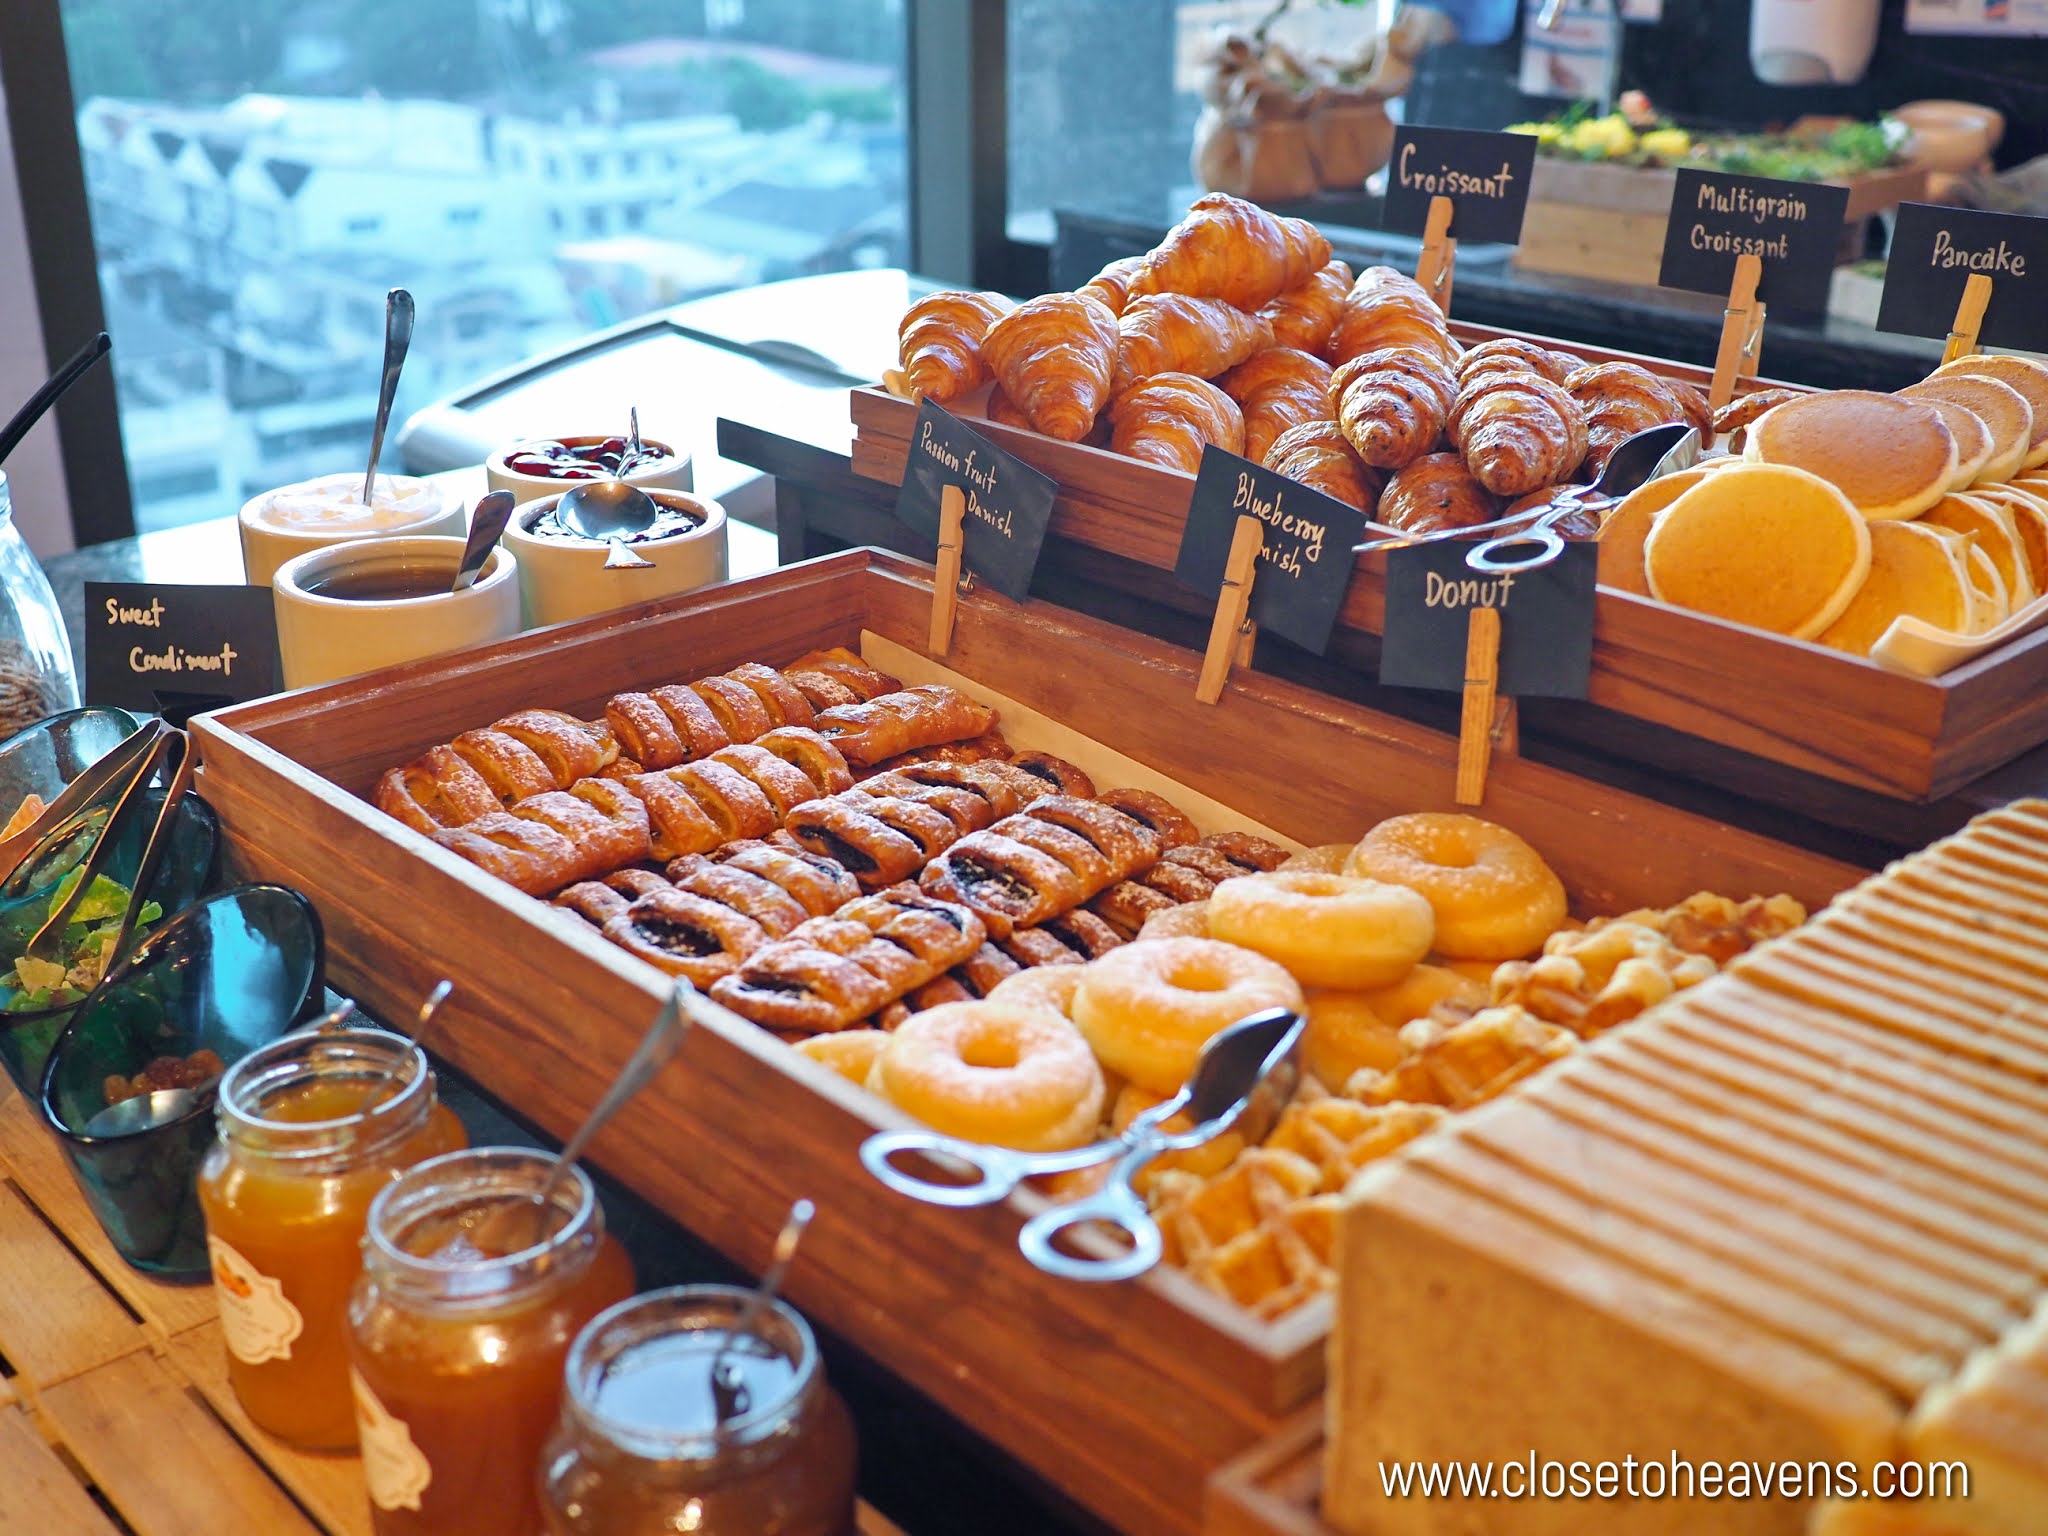 VIE Hotel Bangkok | Breakfast Buffet